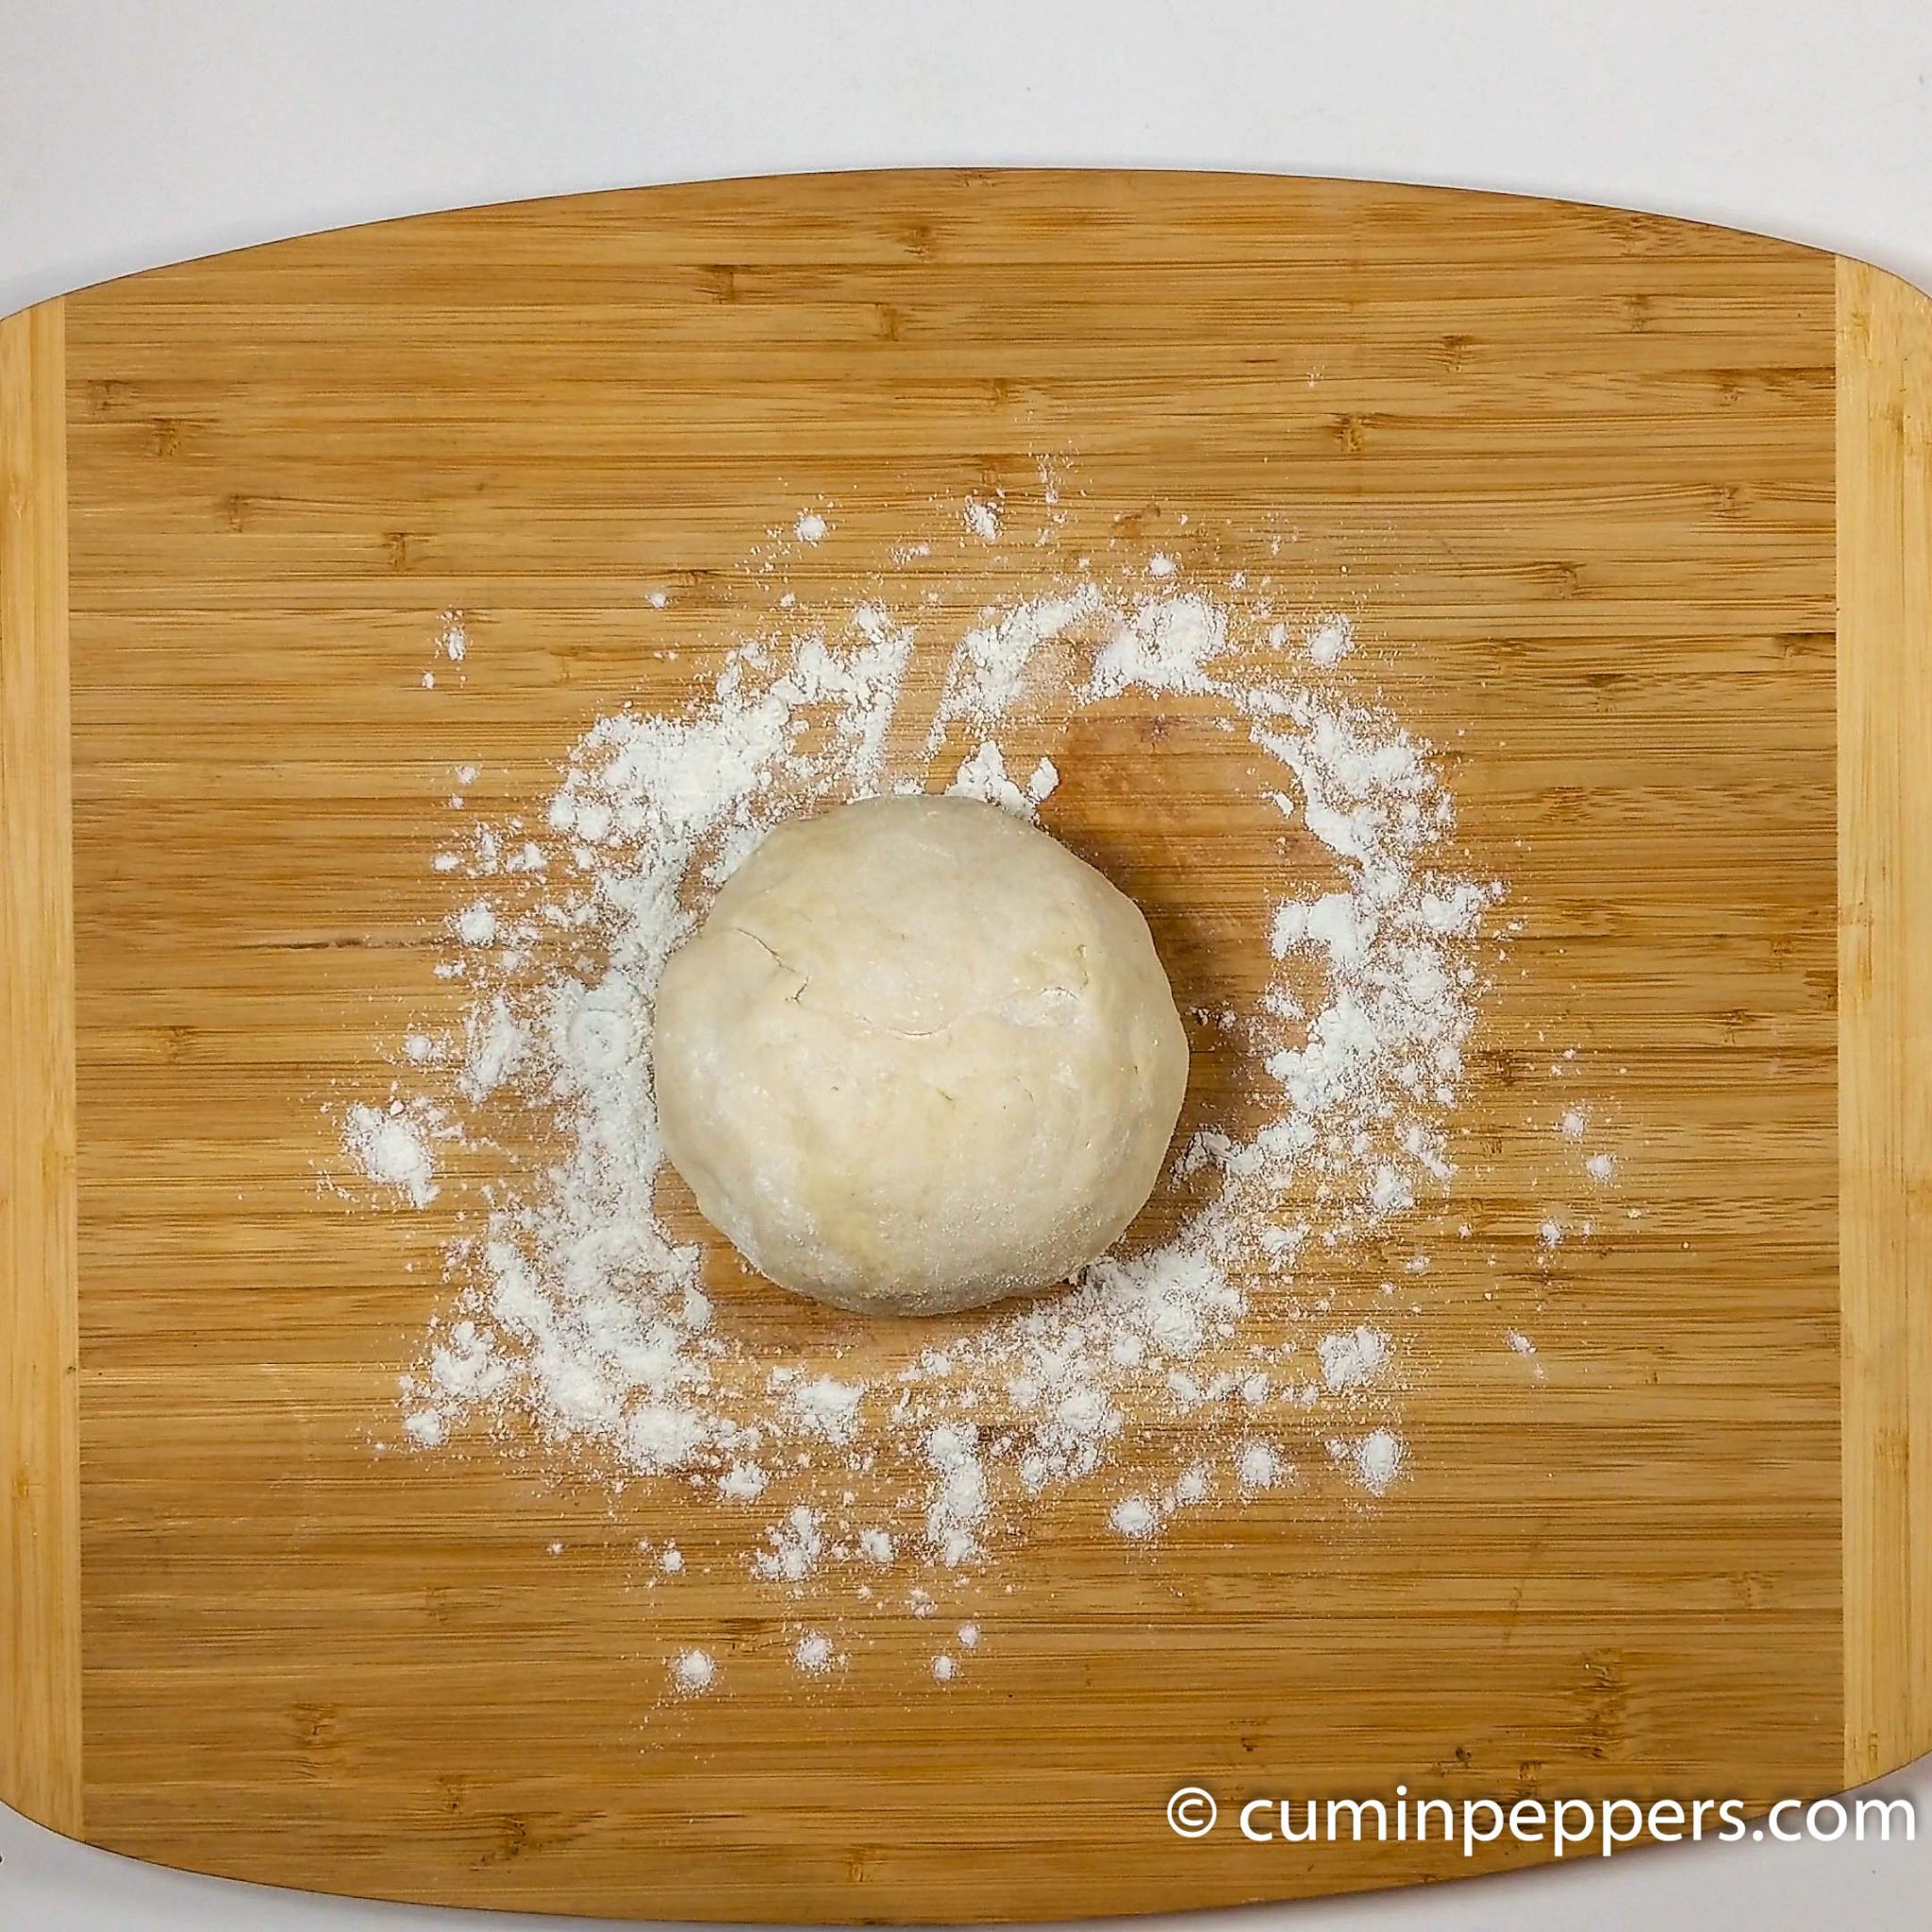 cheese garlic bread recipe - CuminPeppers cheese garlic bread recipe